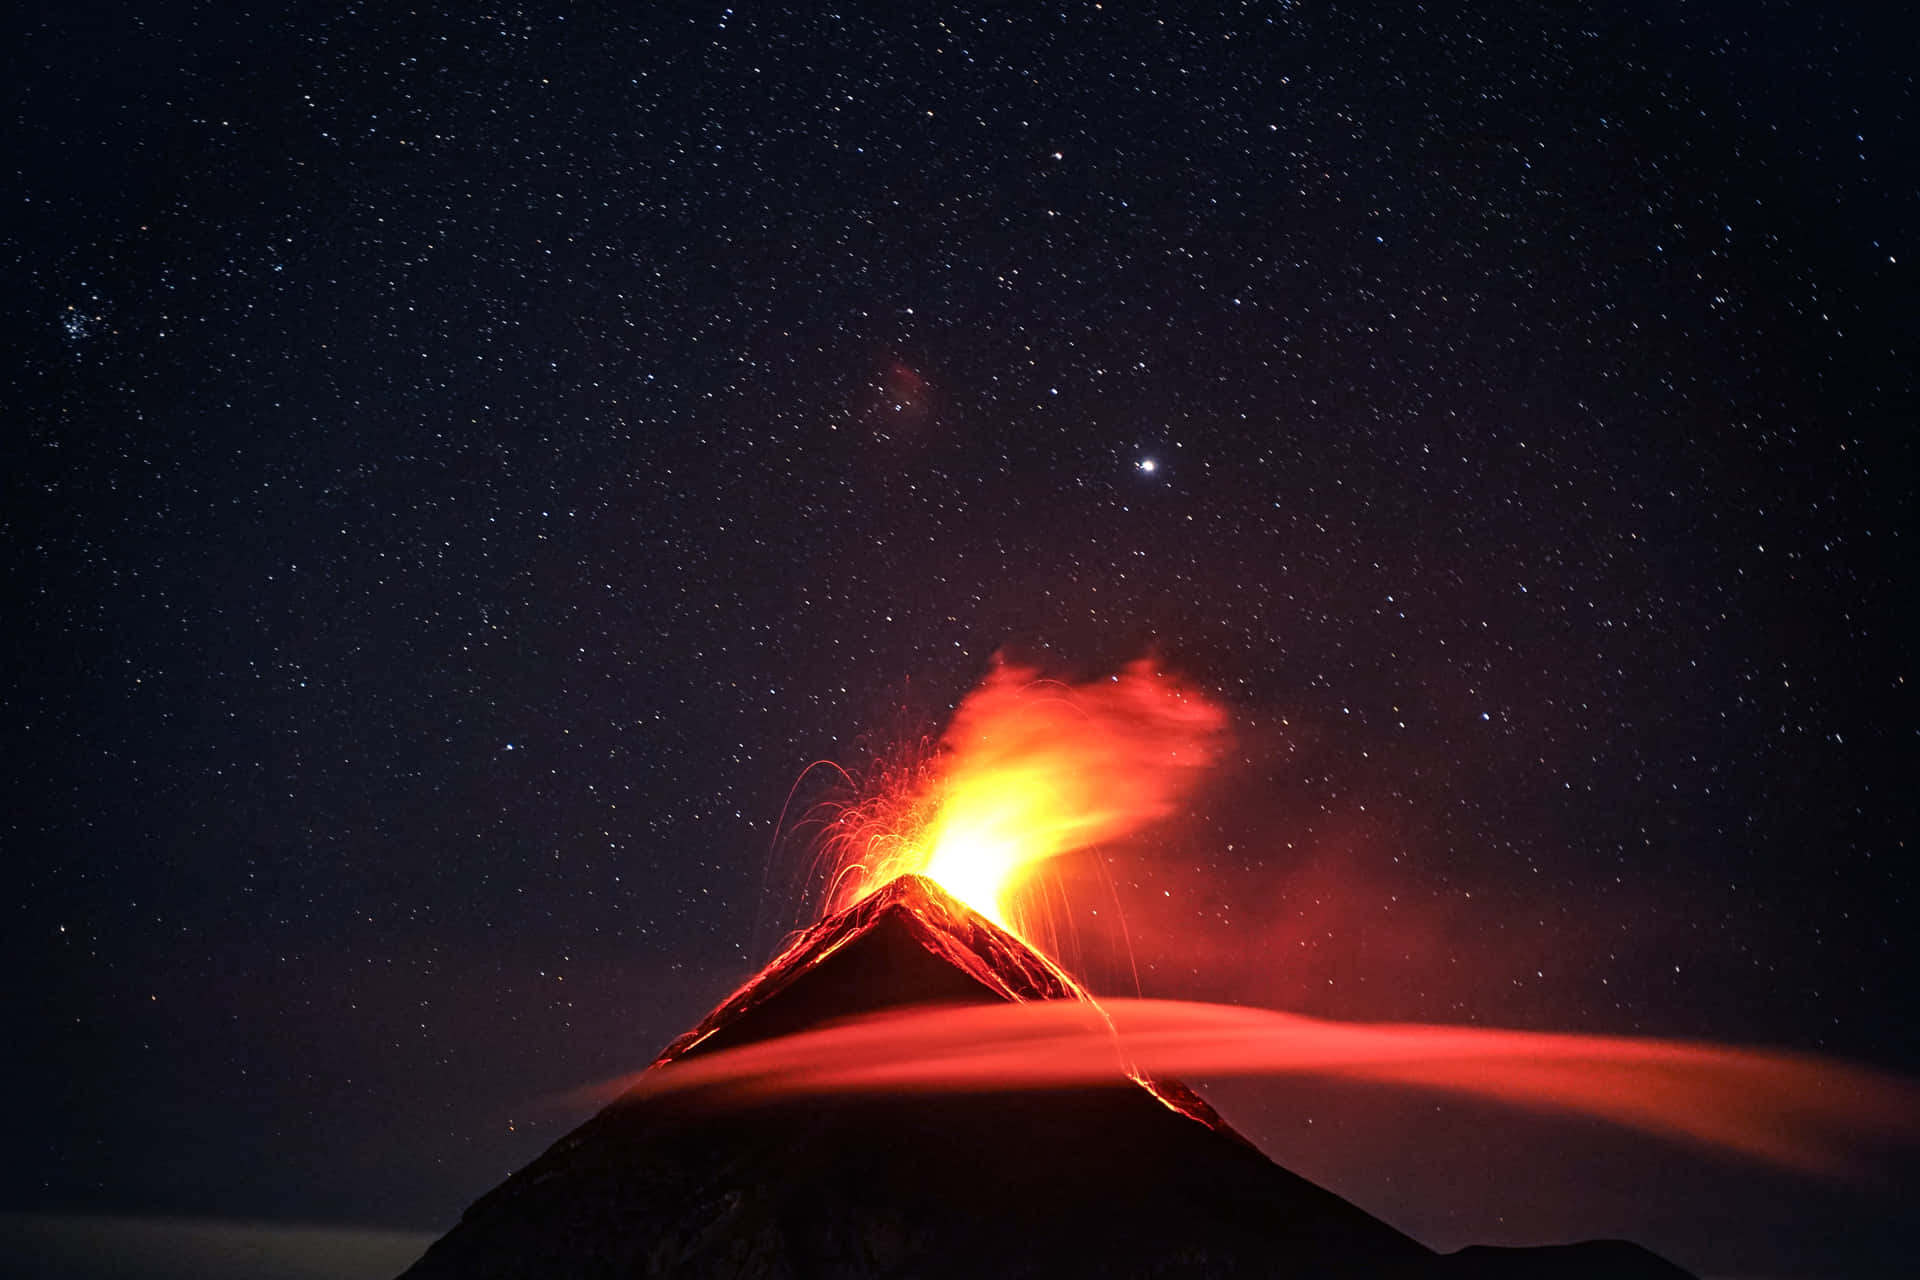 "Illuminated Volcano Erupting in Nature's Fury"